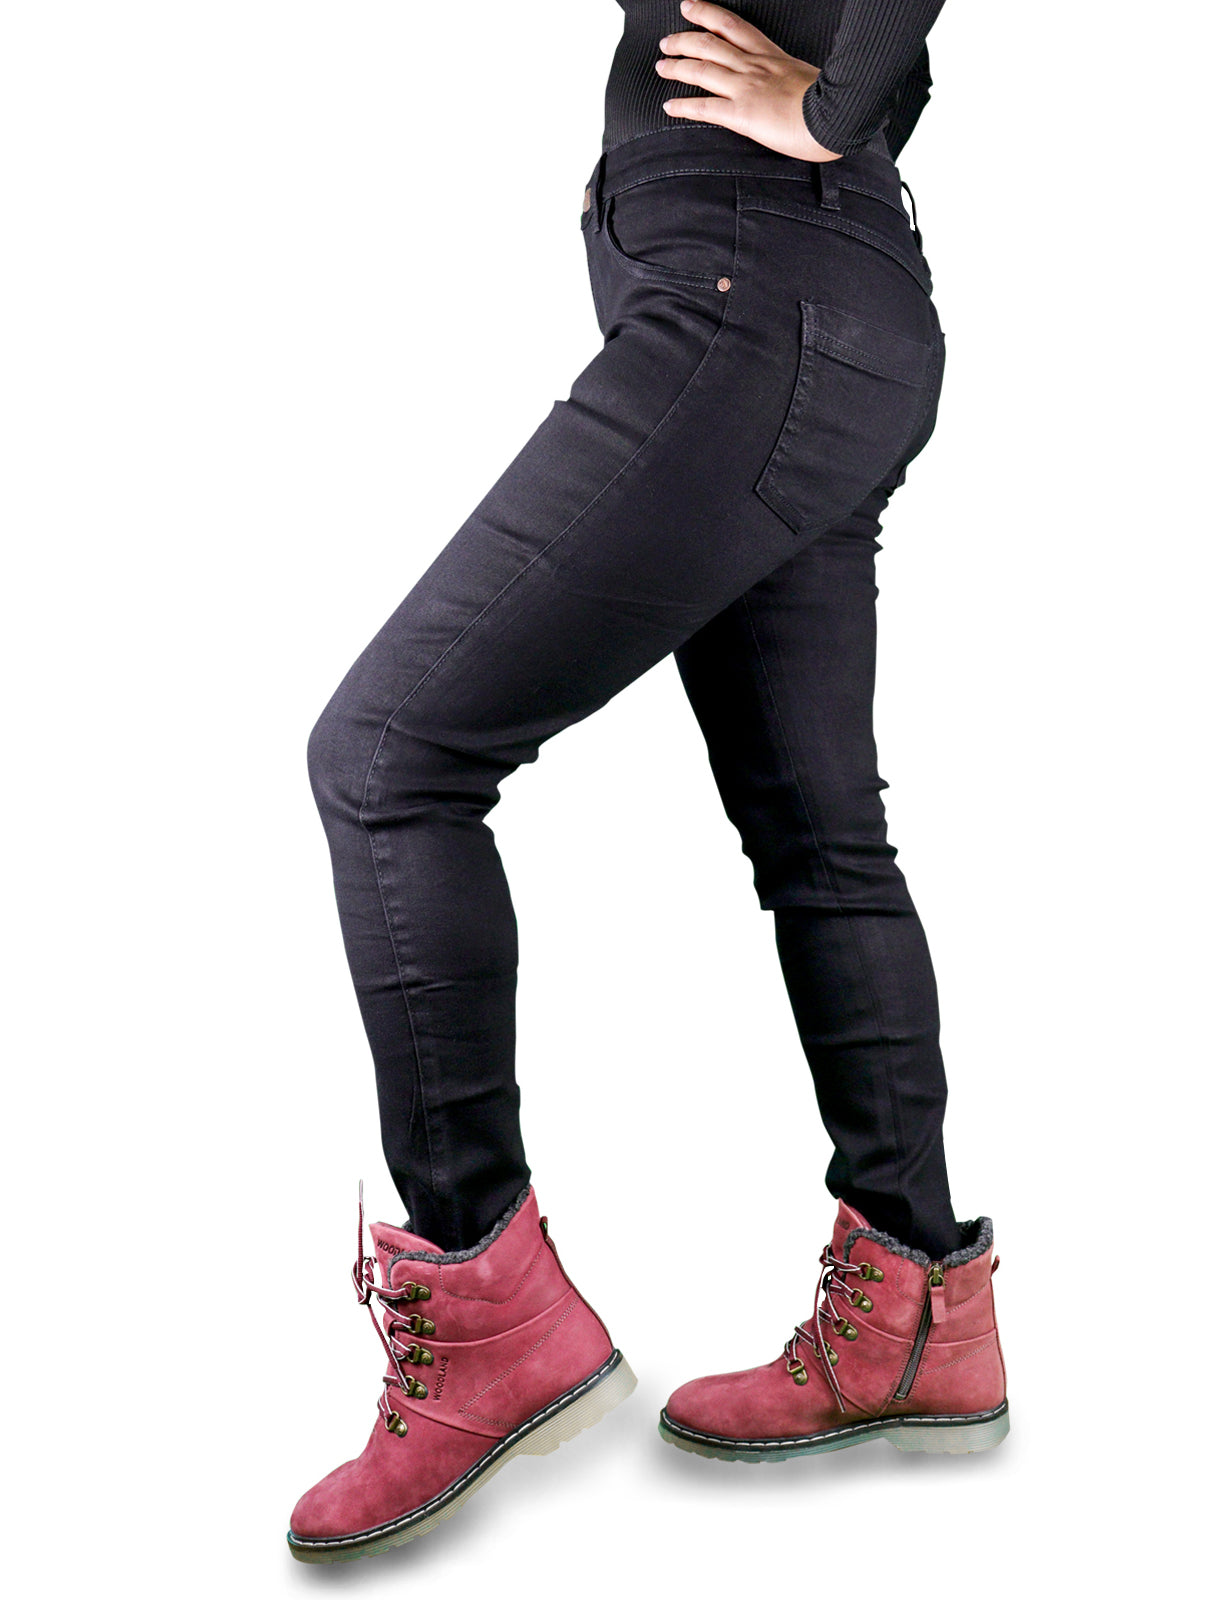 ShyCloset Pocket Jeggings Jeans Leggings Pants - Women Bottom Casual Comfy  Slim Fit Denim Skinny Stretch Plus Size - black - X-Large : :  Fashion